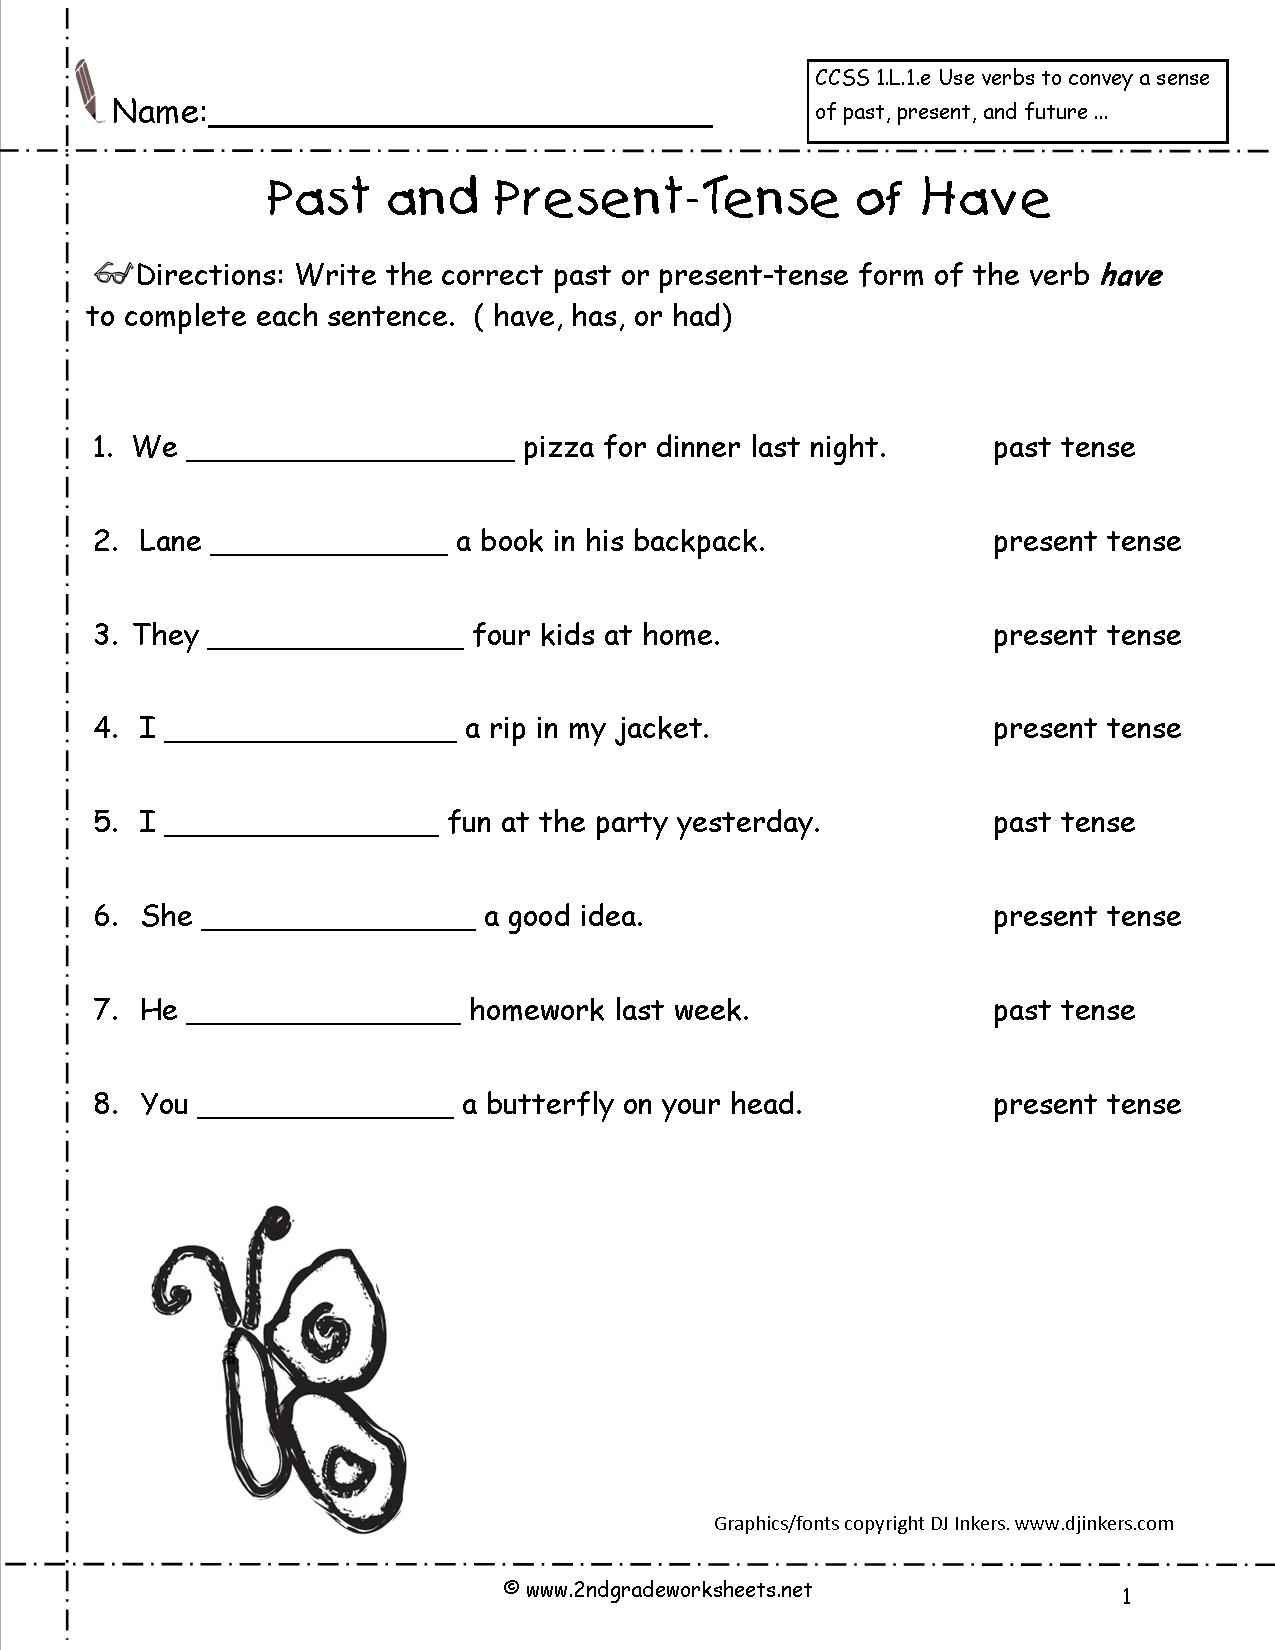 Present Tense Vs Past Tense Verbs Worksheet